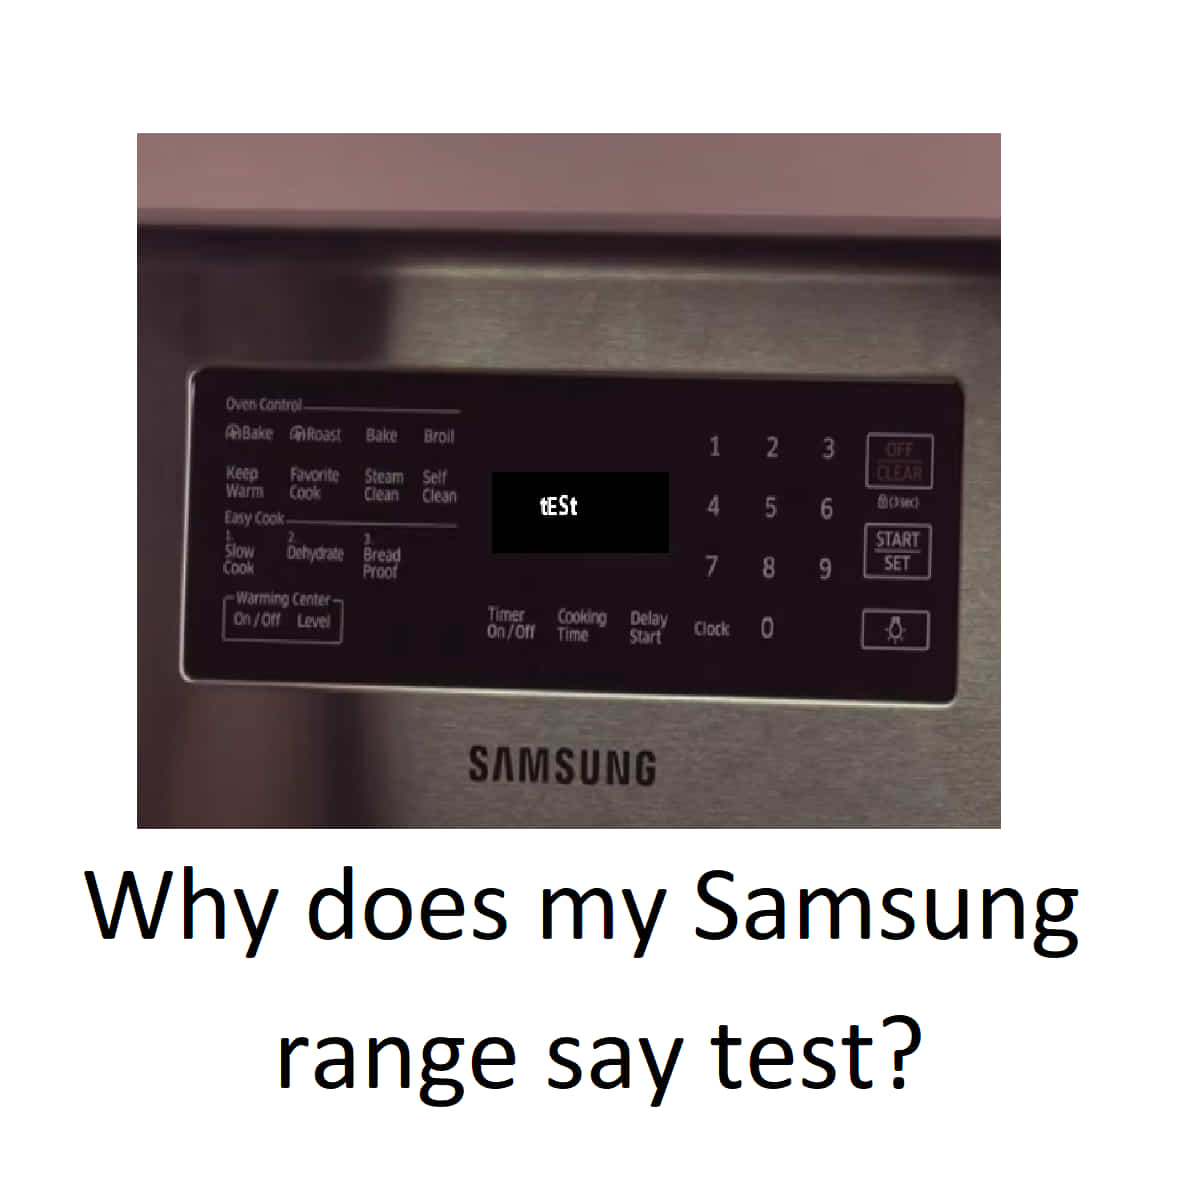 Samsung oven saying test